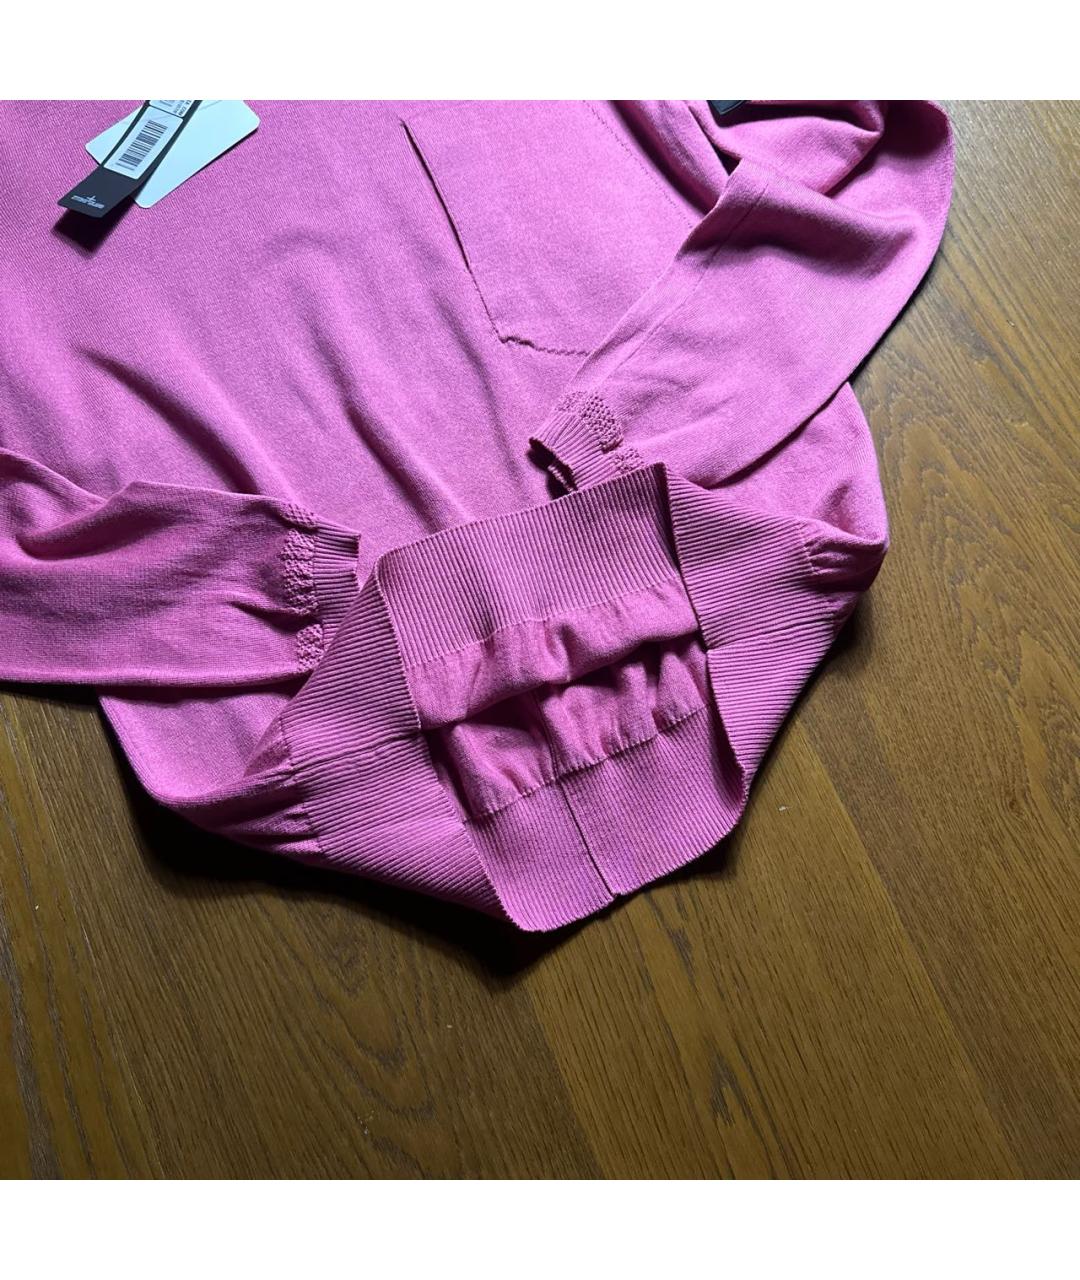 STONE ISLAND SHADOW PROJECT Розовый хлопковый джемпер / свитер, фото 6